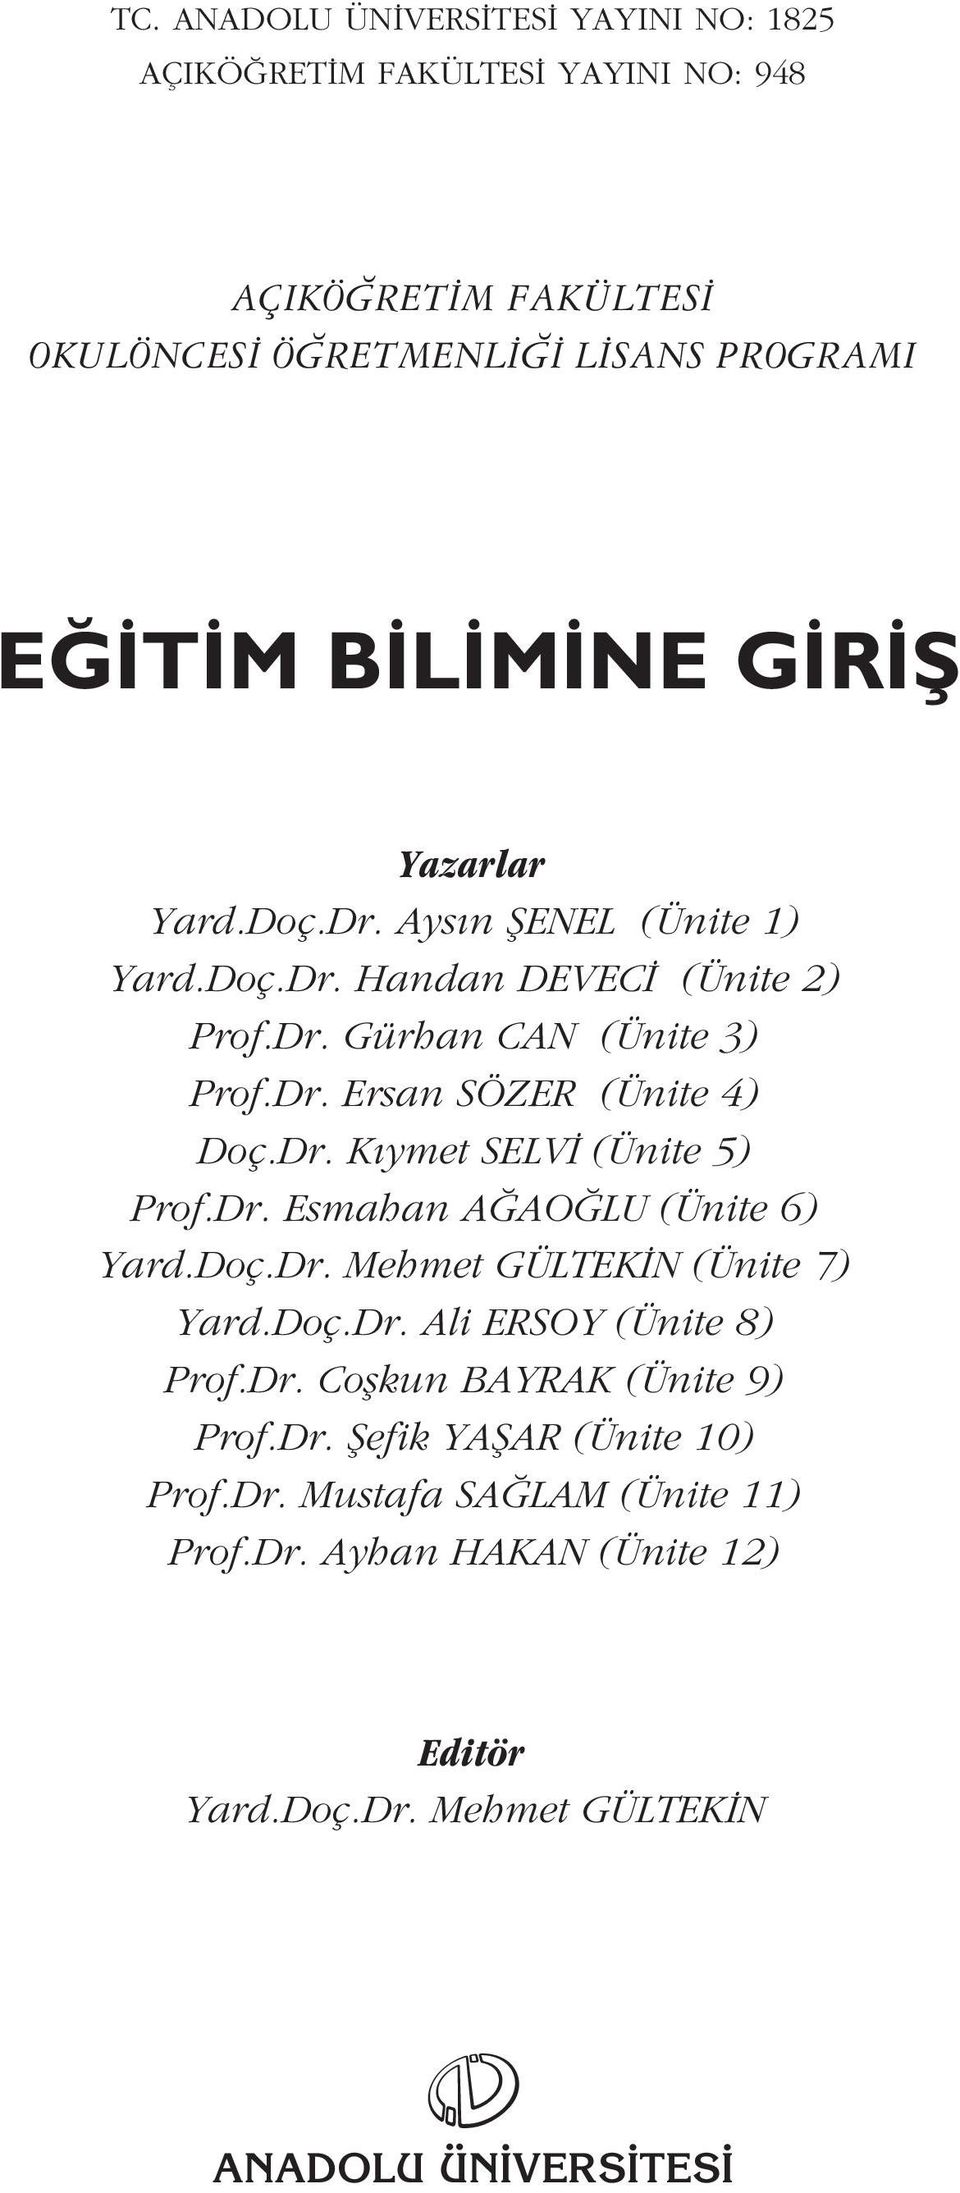 Dr. Esmahan A AO LU (Ünite 6) Yard.Doç.Dr. Mehmet GÜLTEK N (Ünite 7) Yard.Doç.Dr. Ali ERSOY (Ünite 8) Prof.Dr. Coflkun BAYRAK (Ünite 9) Prof.Dr. fiefik YAfiAR (Ünite 10) Prof.